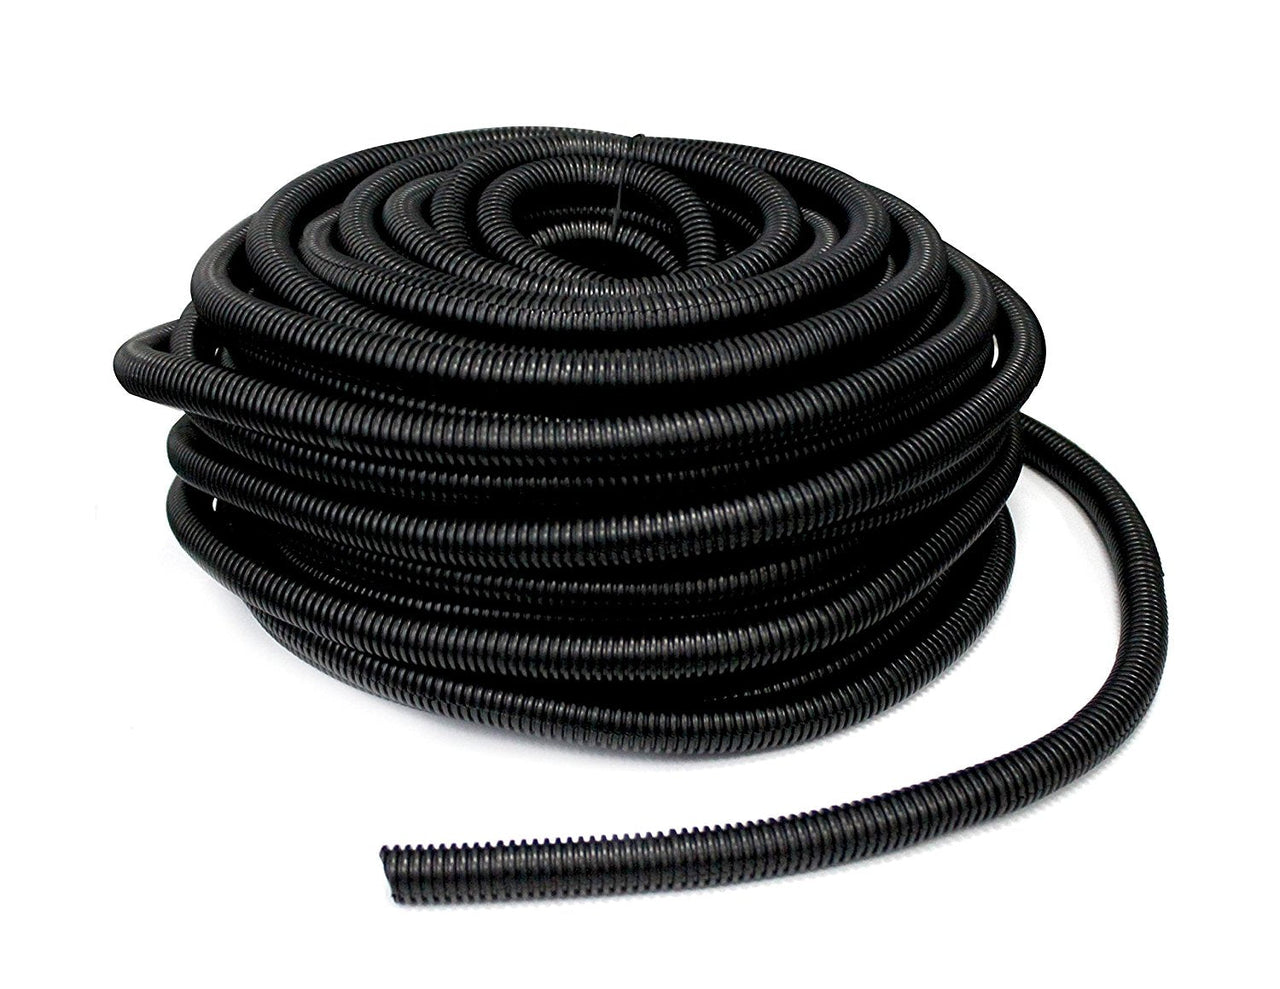 Absolute SLT10-25 3M 1700 25' 1" 25mm Split Wire Loom Conduit Polyethylene Corrugated Tubing Sleeve Tube & 3M Electrical Tape